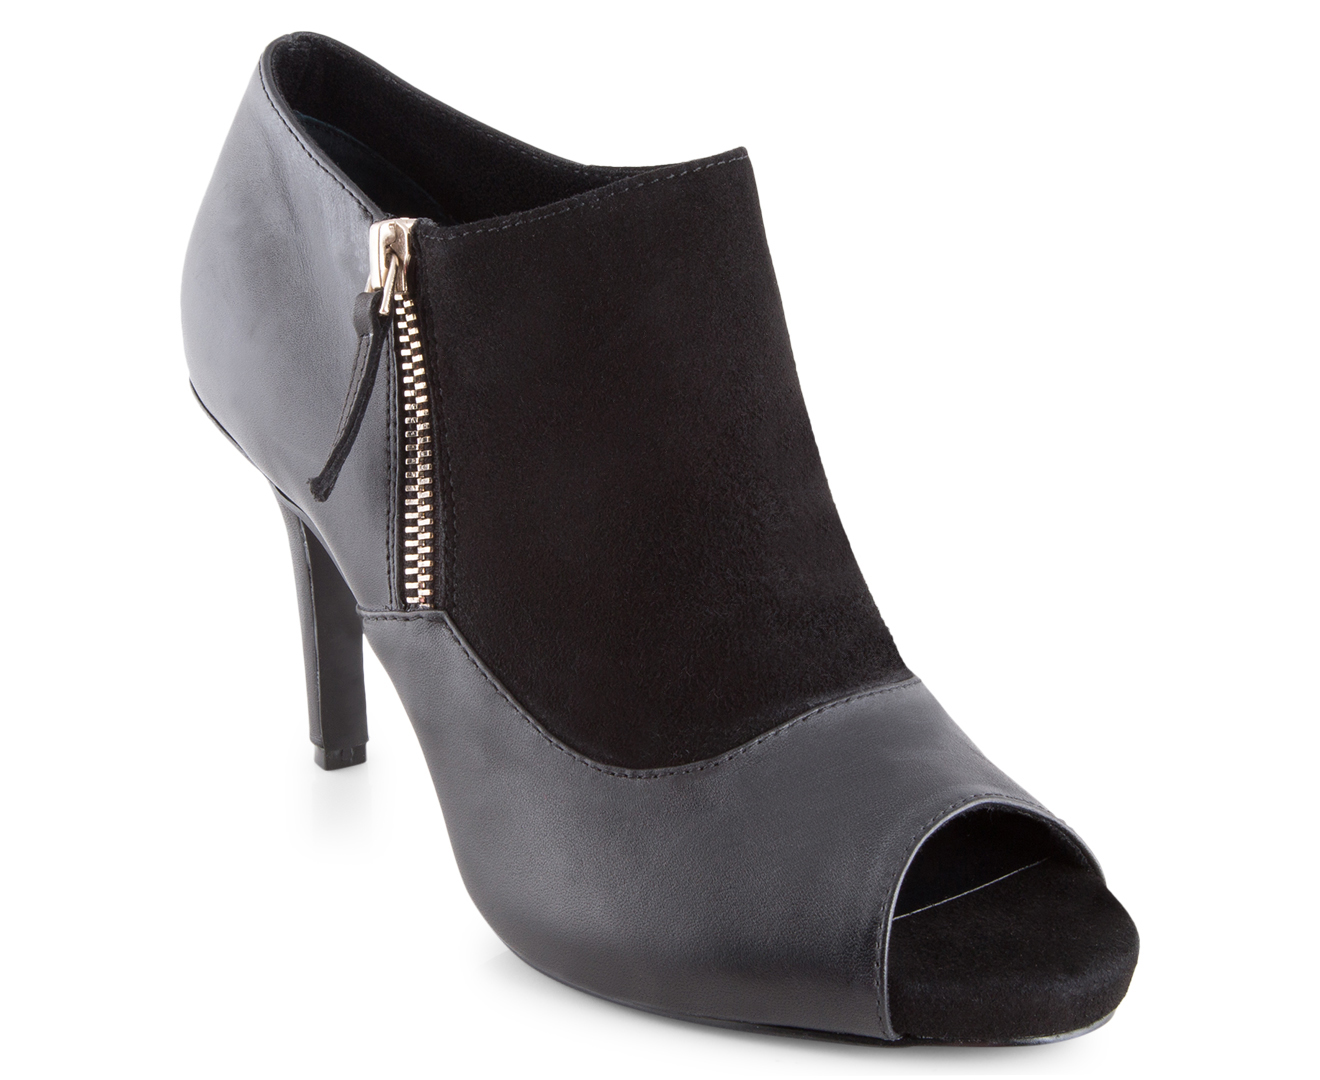 Sandler Women's Claudia Glove Shoe - Suede Black | Www.catch.com.au